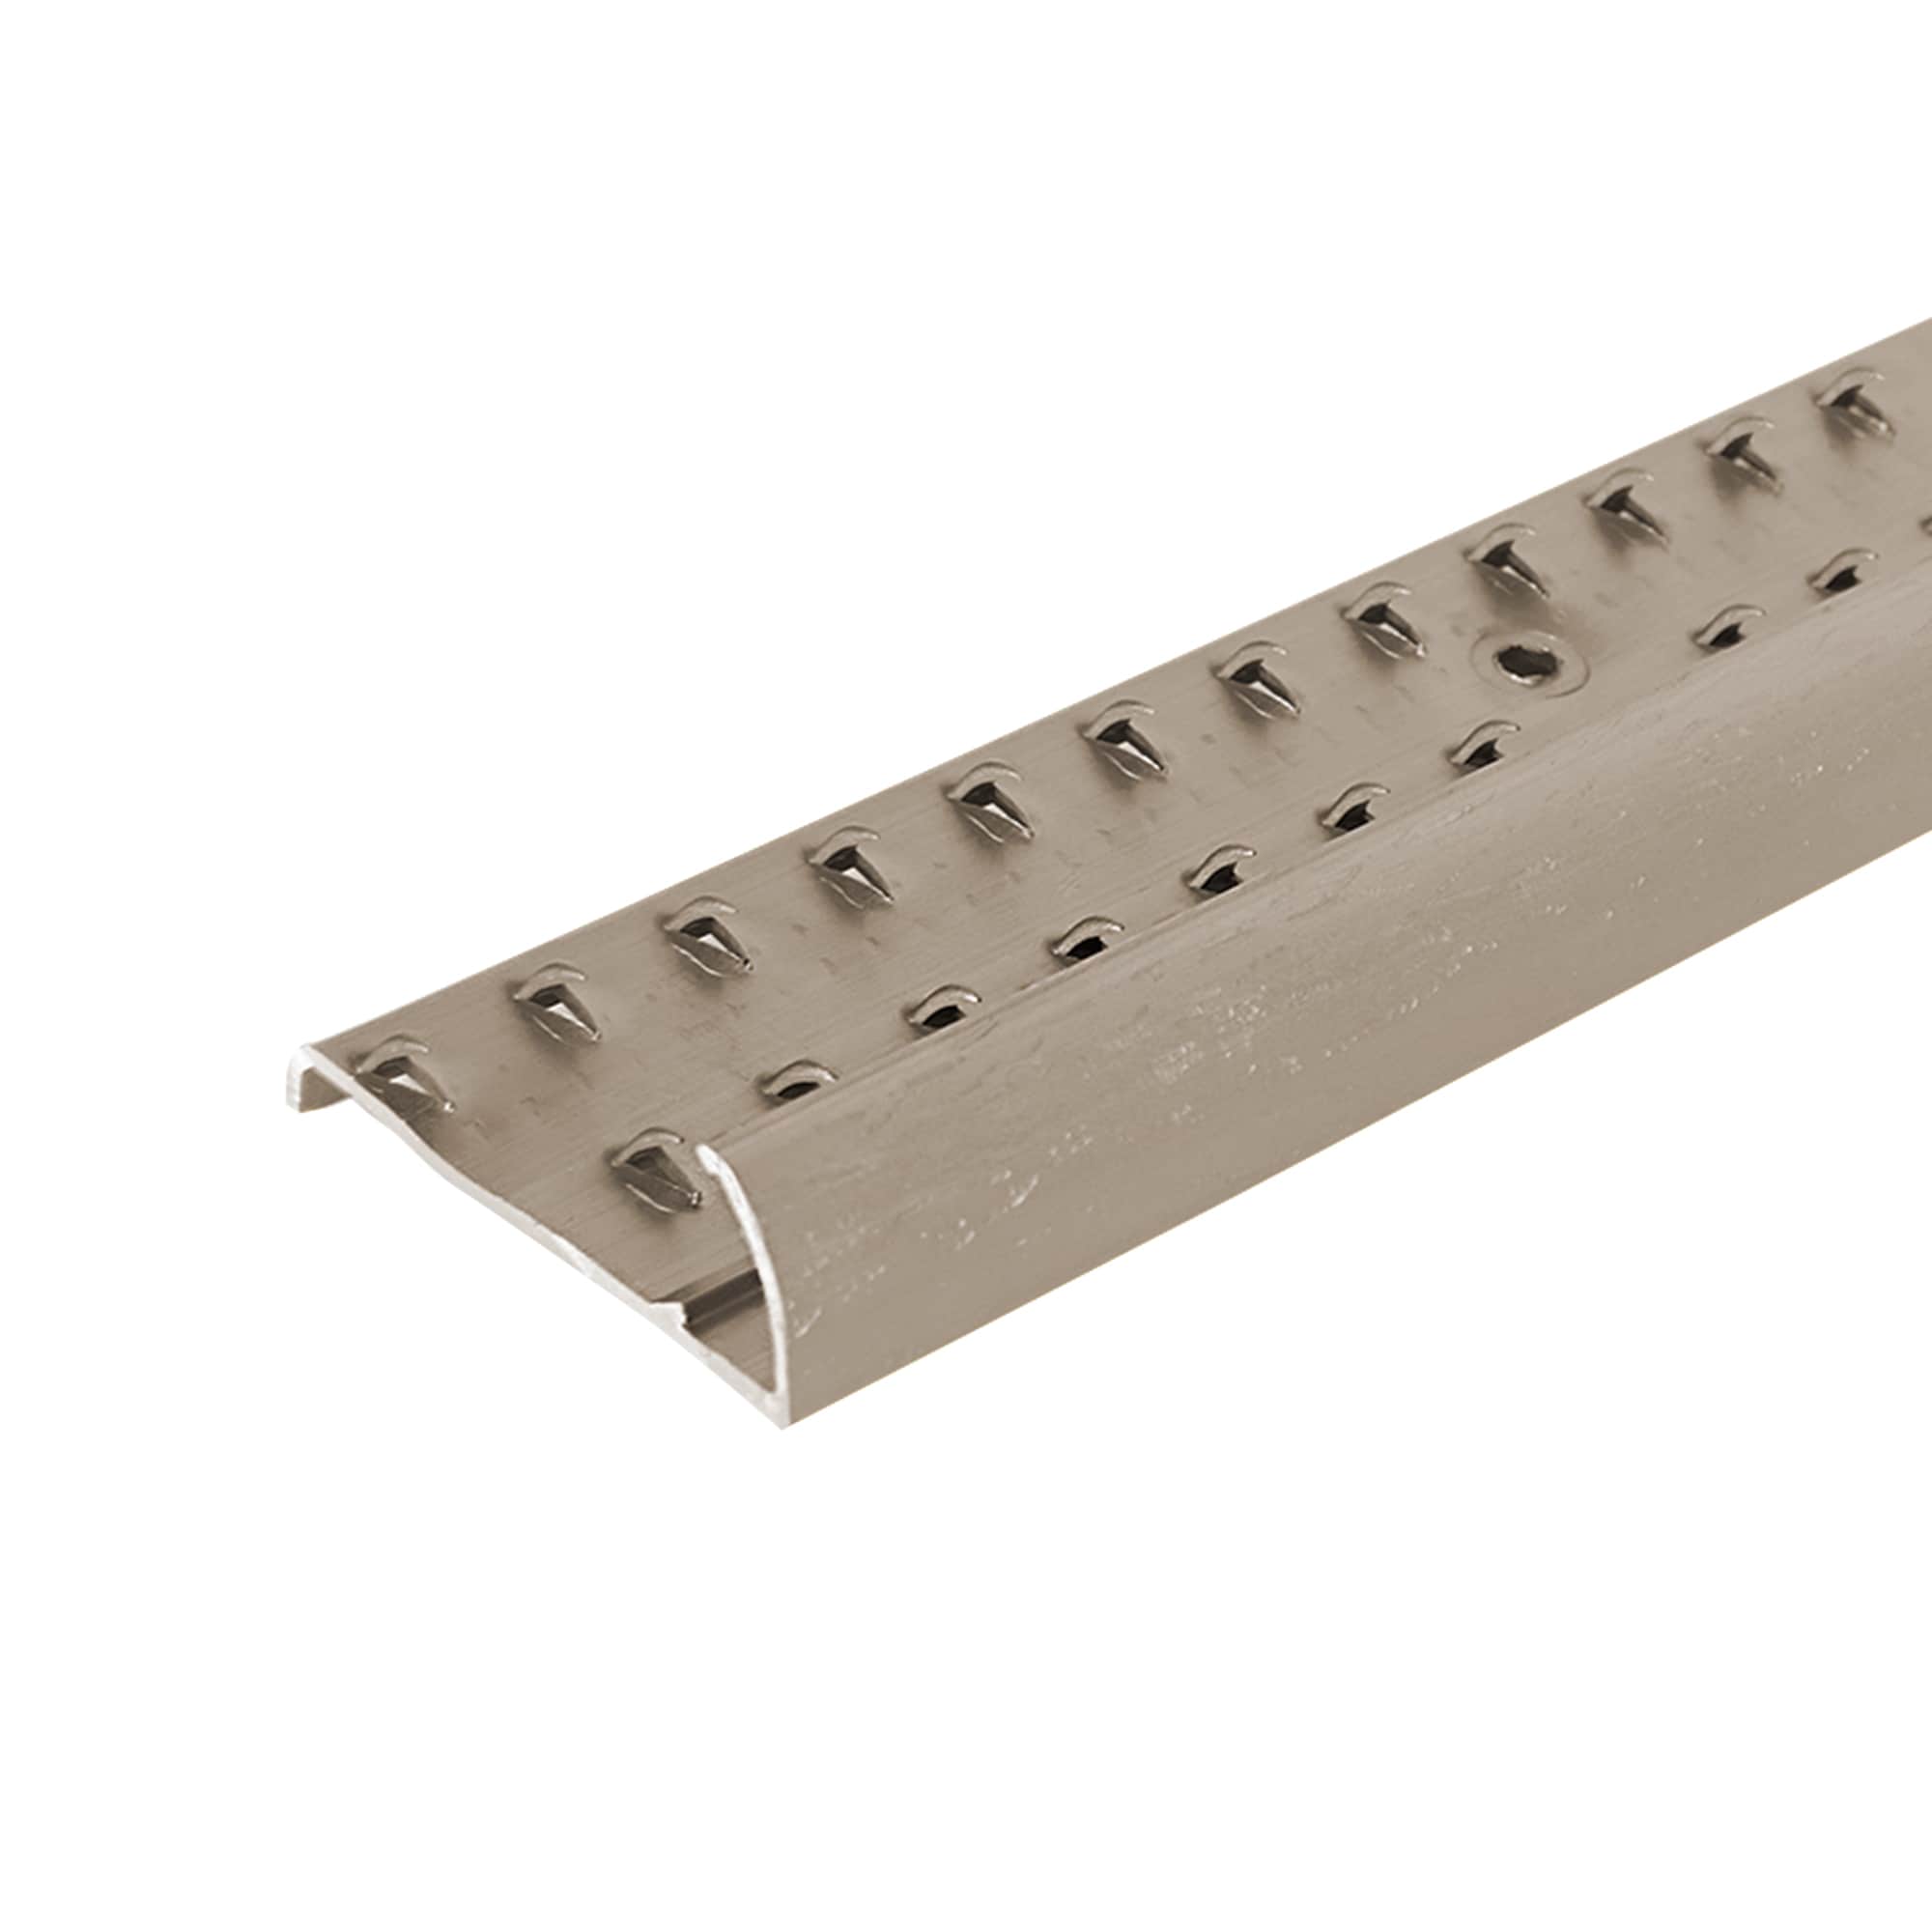 Waterproof Tray Aluminum Baseboard Cable Concealer PVC Metal